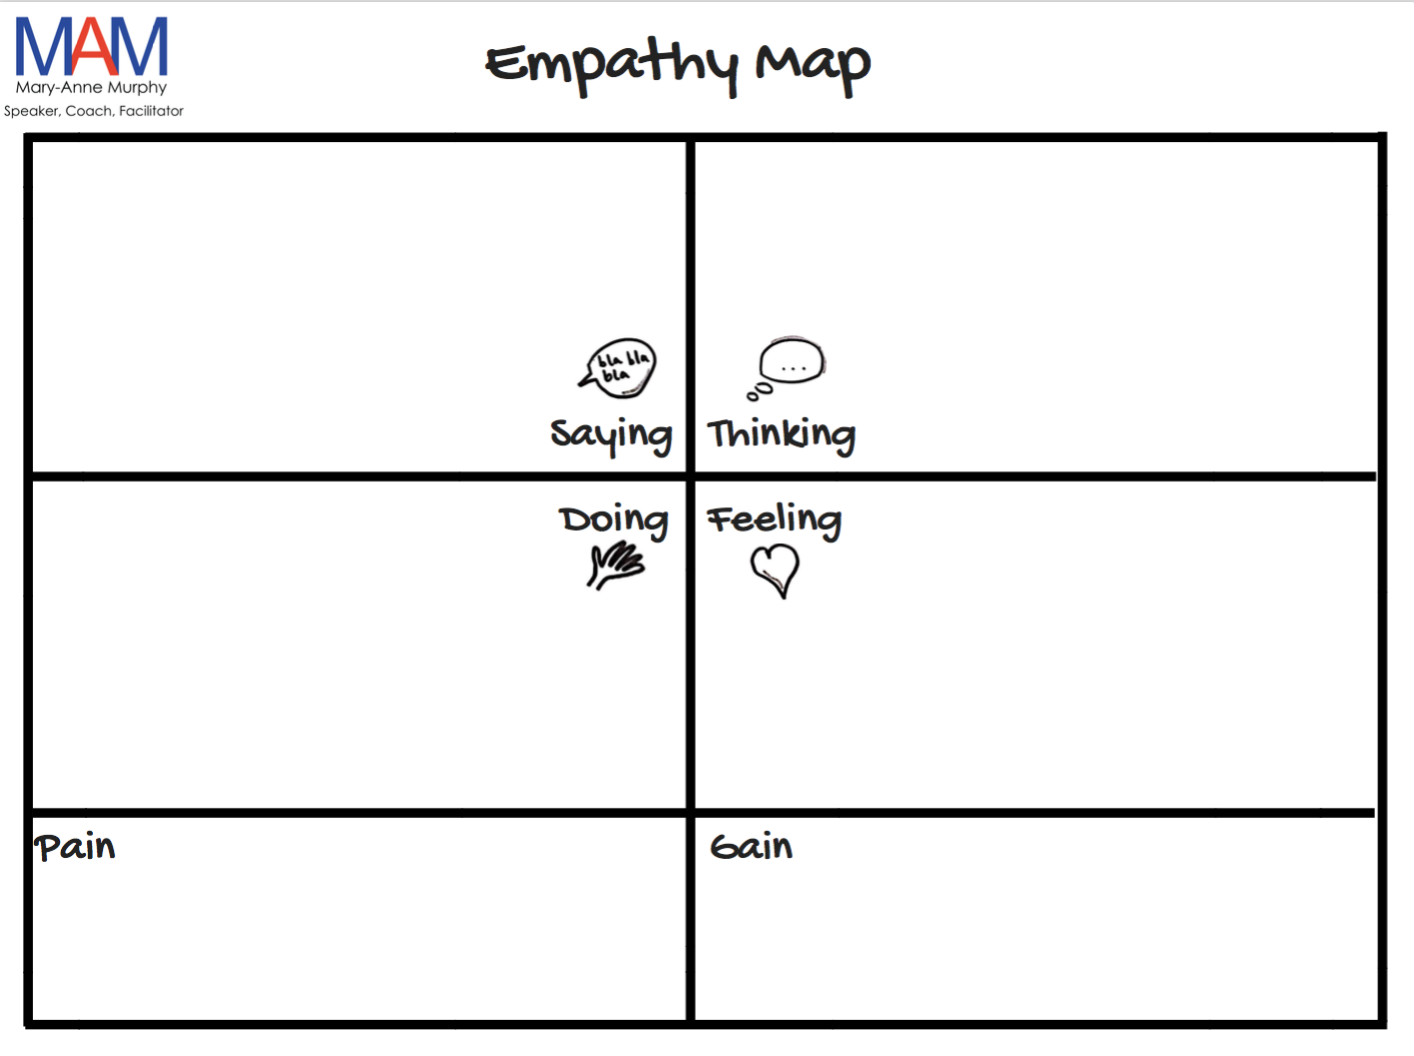  Empathy Map 